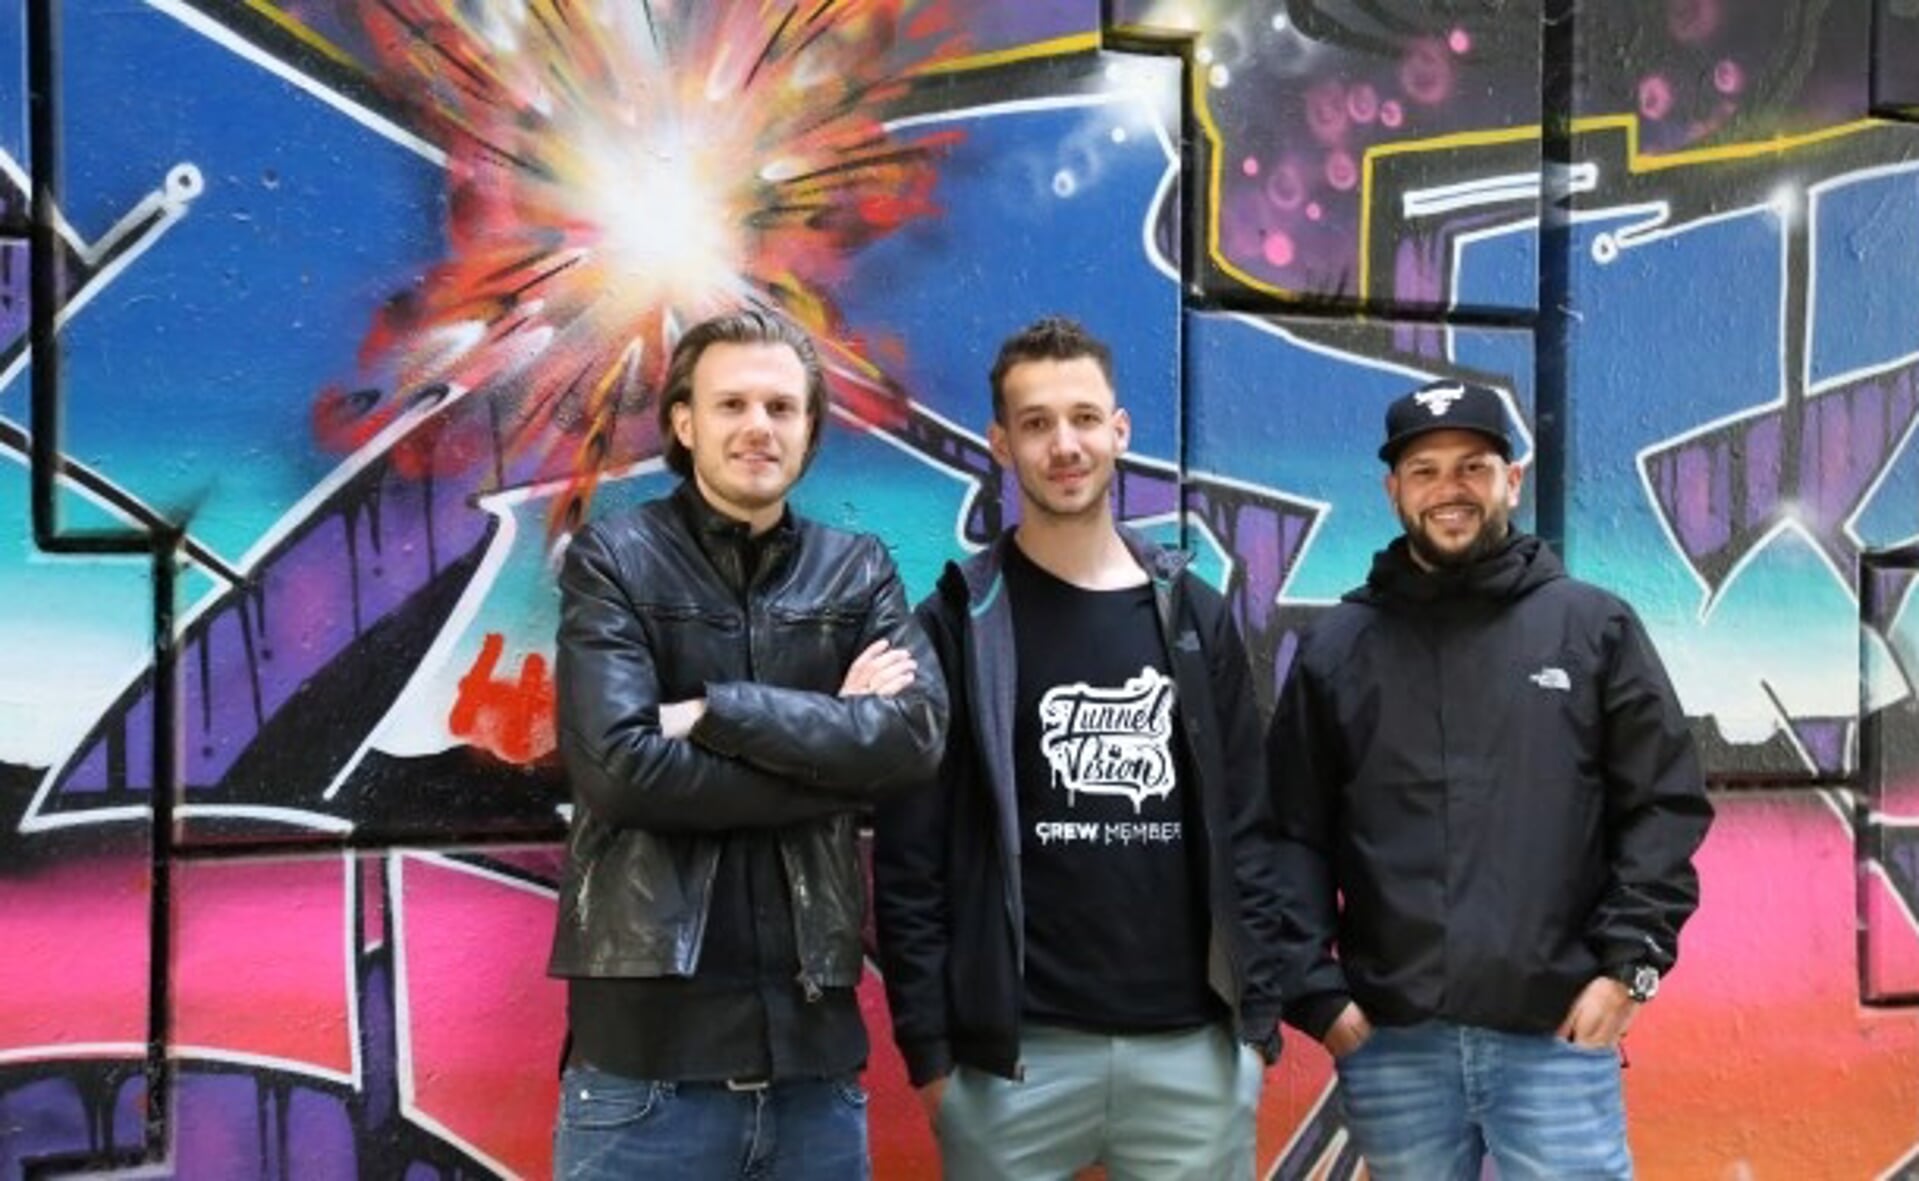 Het organiserende team van Tunnel Vision 2.0, met van links naar rechts Paul, Jan en Mitch. (Foto: Sander van Kasteren)